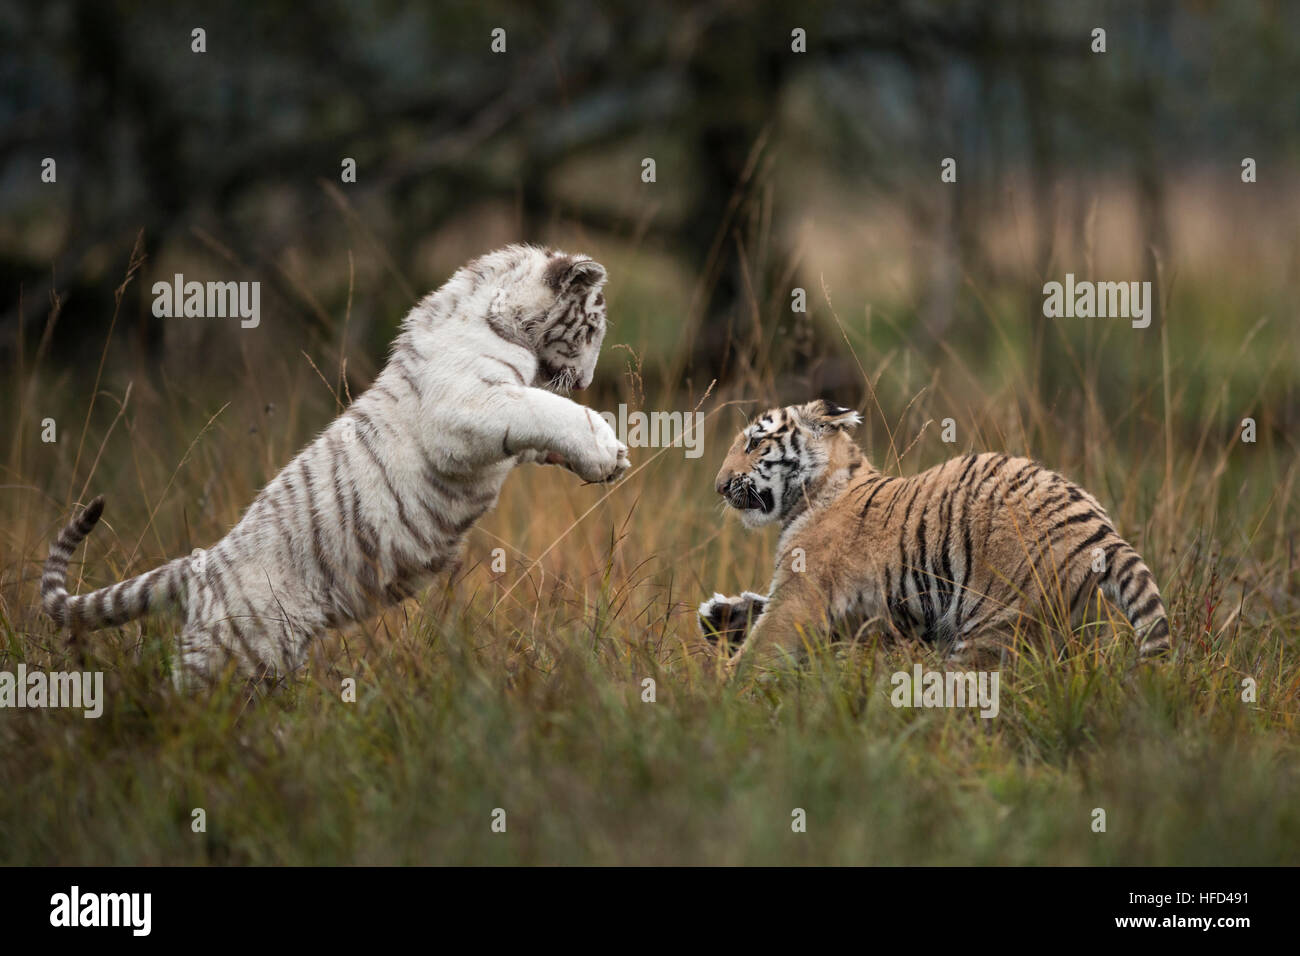 Bengal Tiger / Koenigstiger ( Panthera tigris tigris), in playful fight, fighting, training their strength and skills. Stock Photo